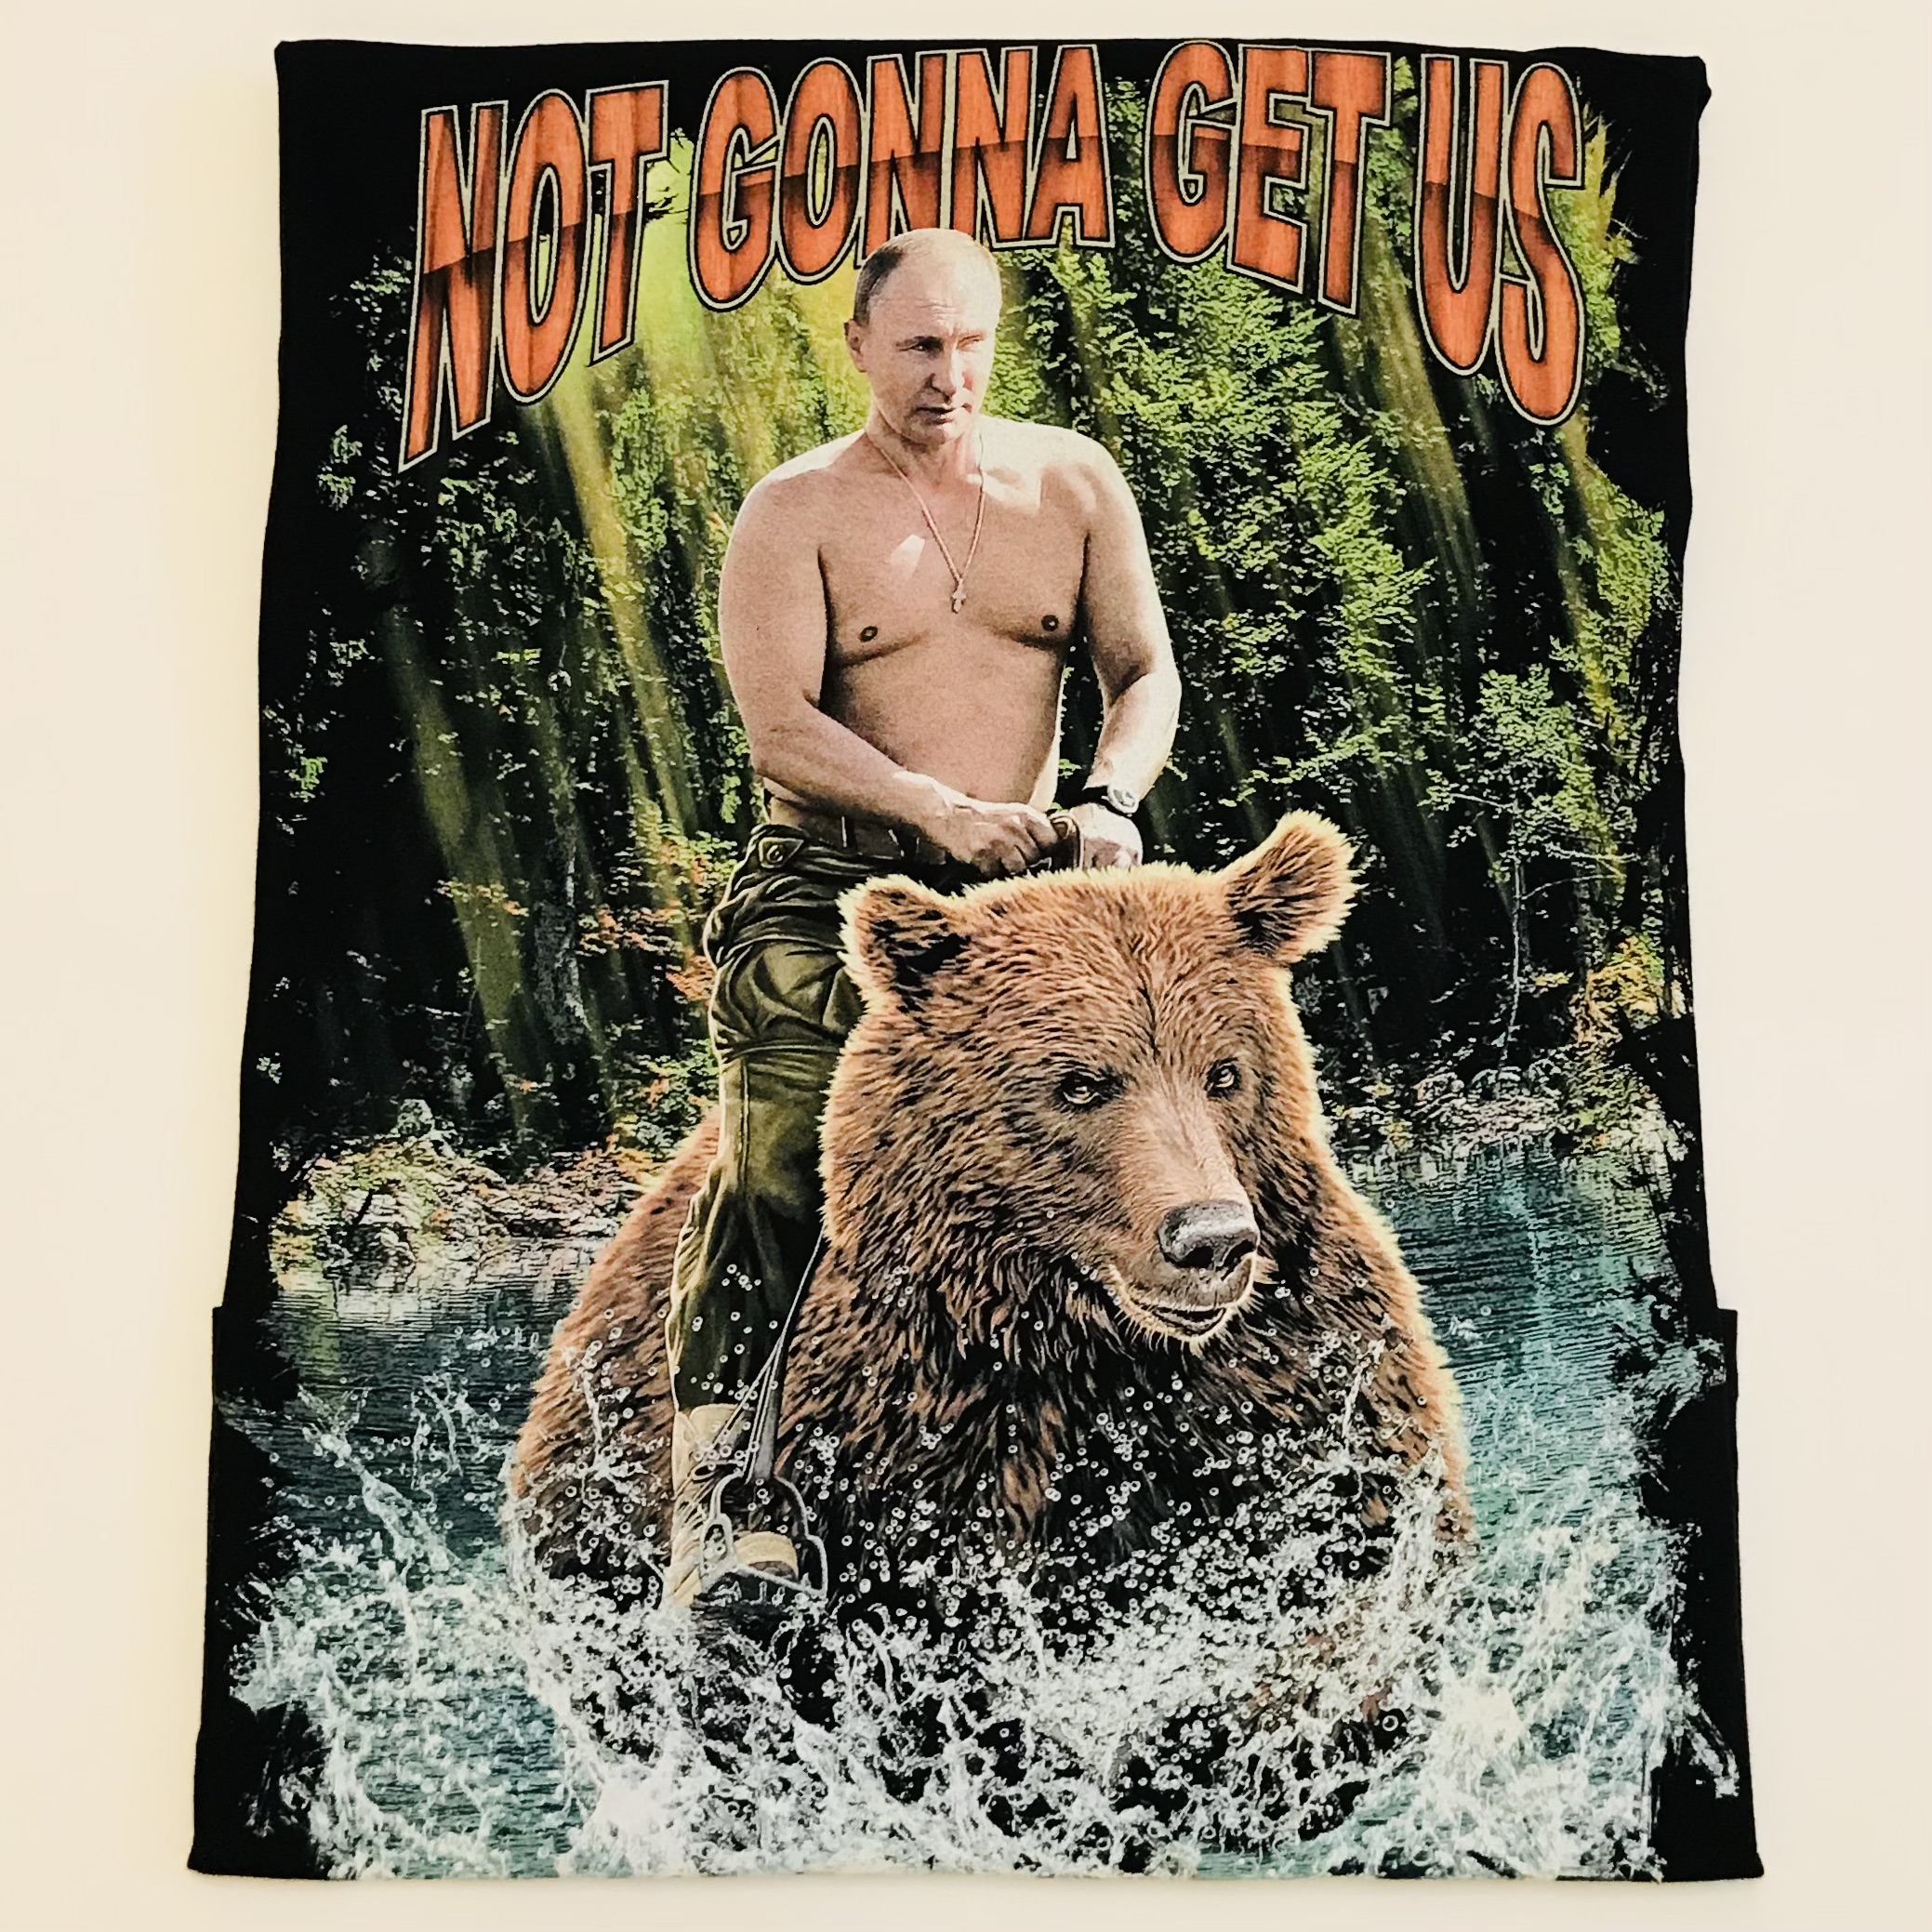 Футболка сувенирная  Путин "Not gonna get us"